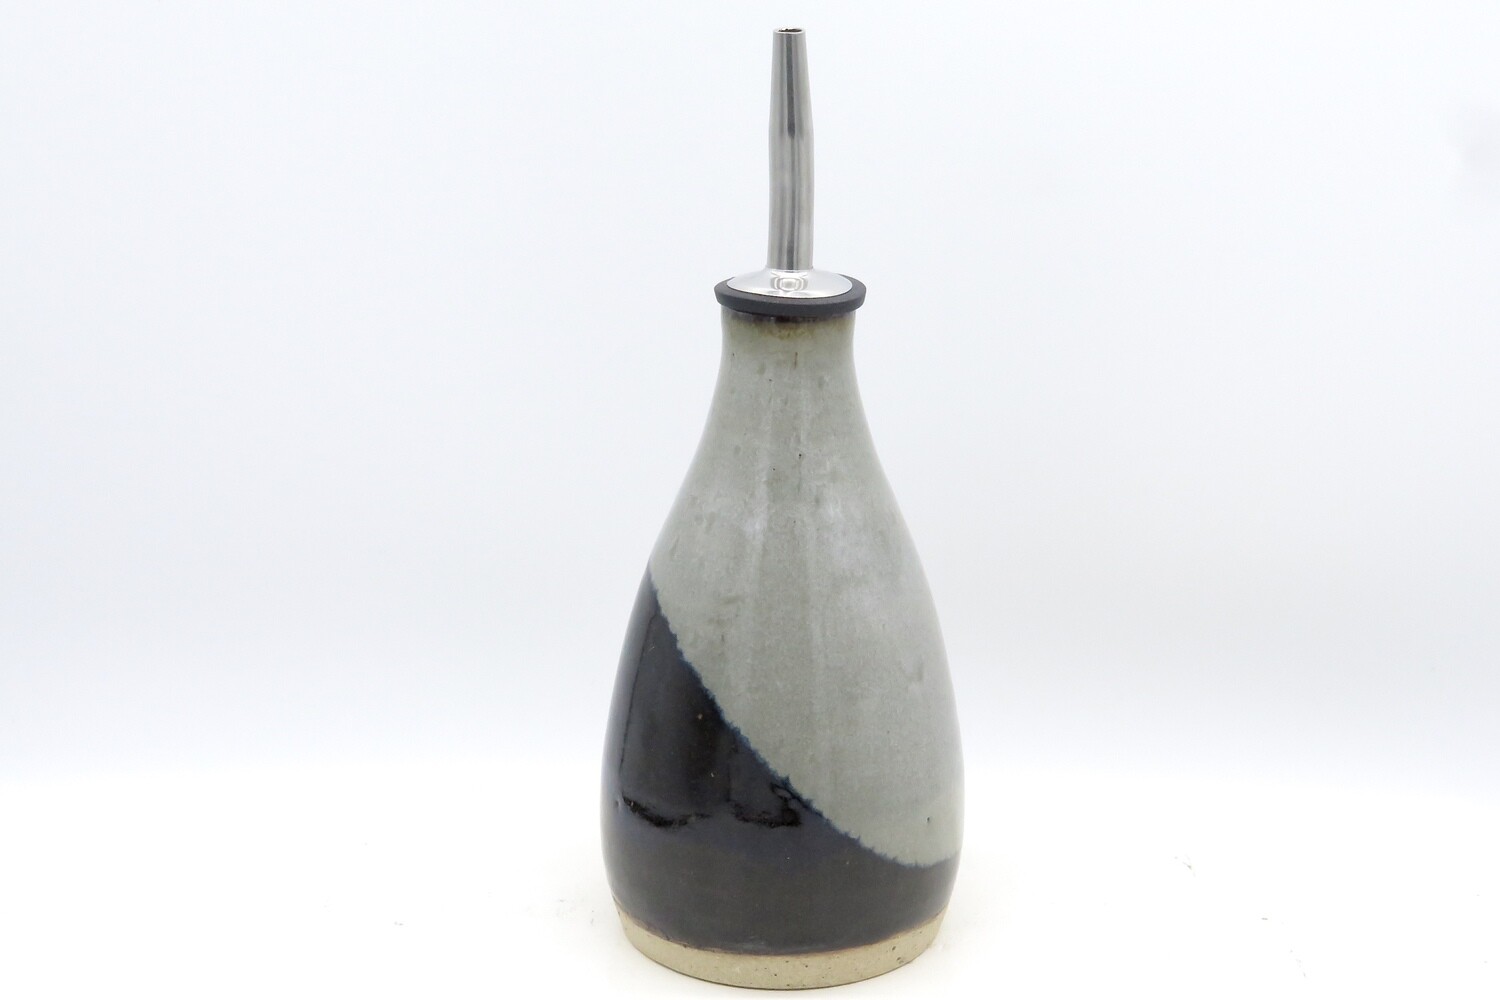 Oil Bottle - Black and mottled grey.